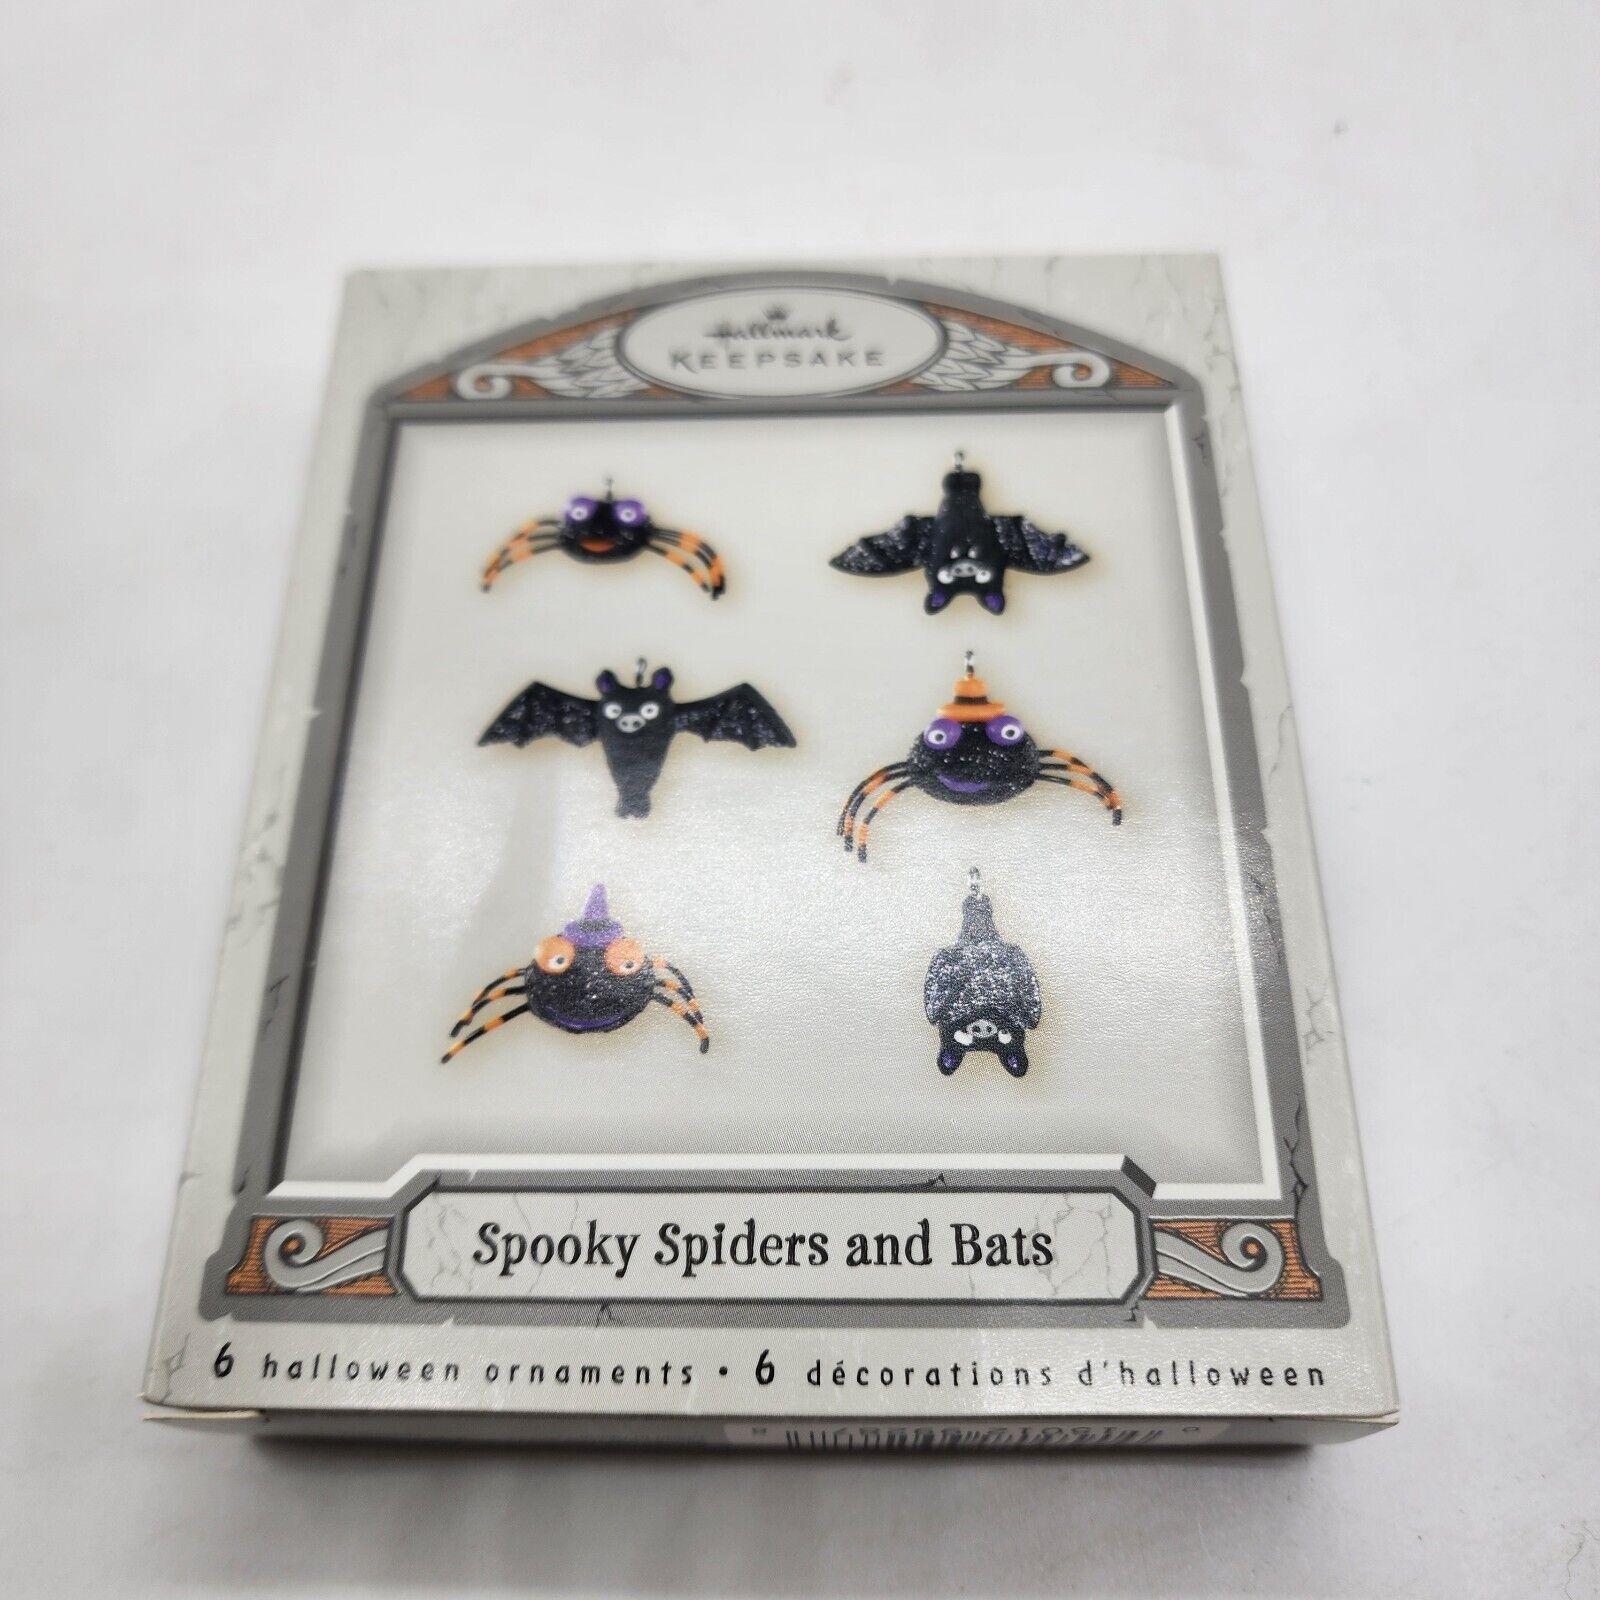 2007 Hallmark Halloween Set of 6 Spooky Spiders and Bats Miniature Ornaments